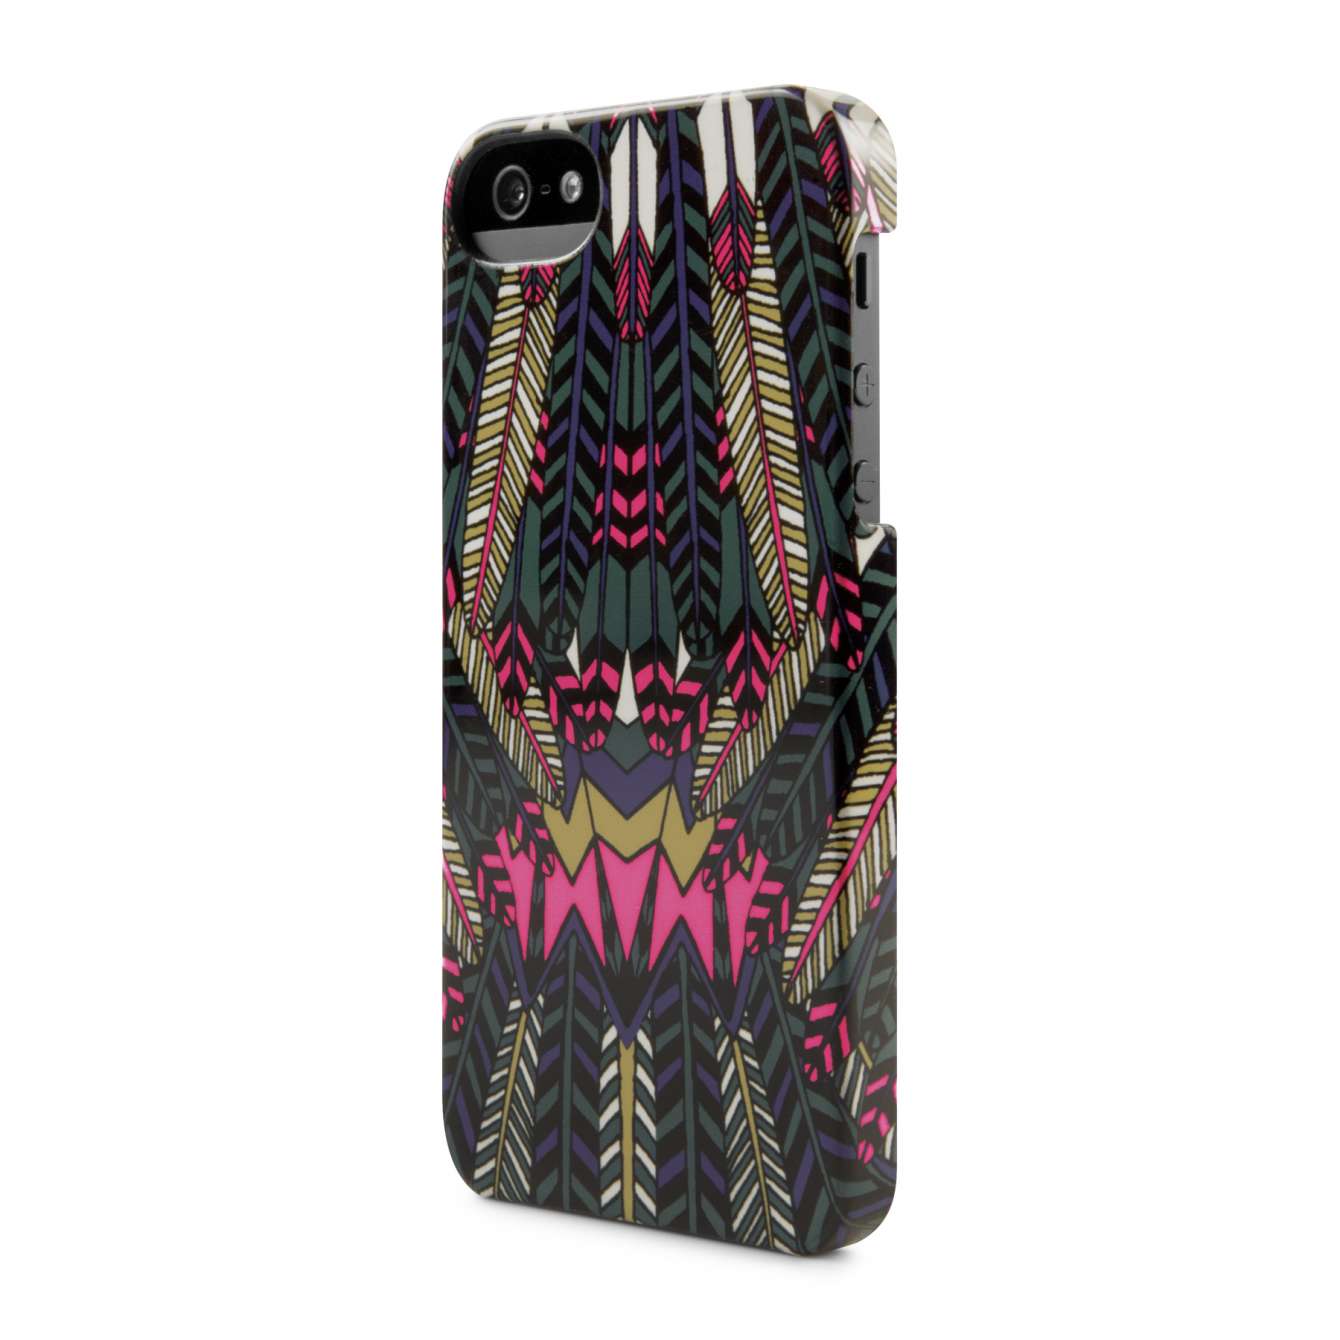 Mara Hoffman x Incase iPhone 5 Snap Cases-5